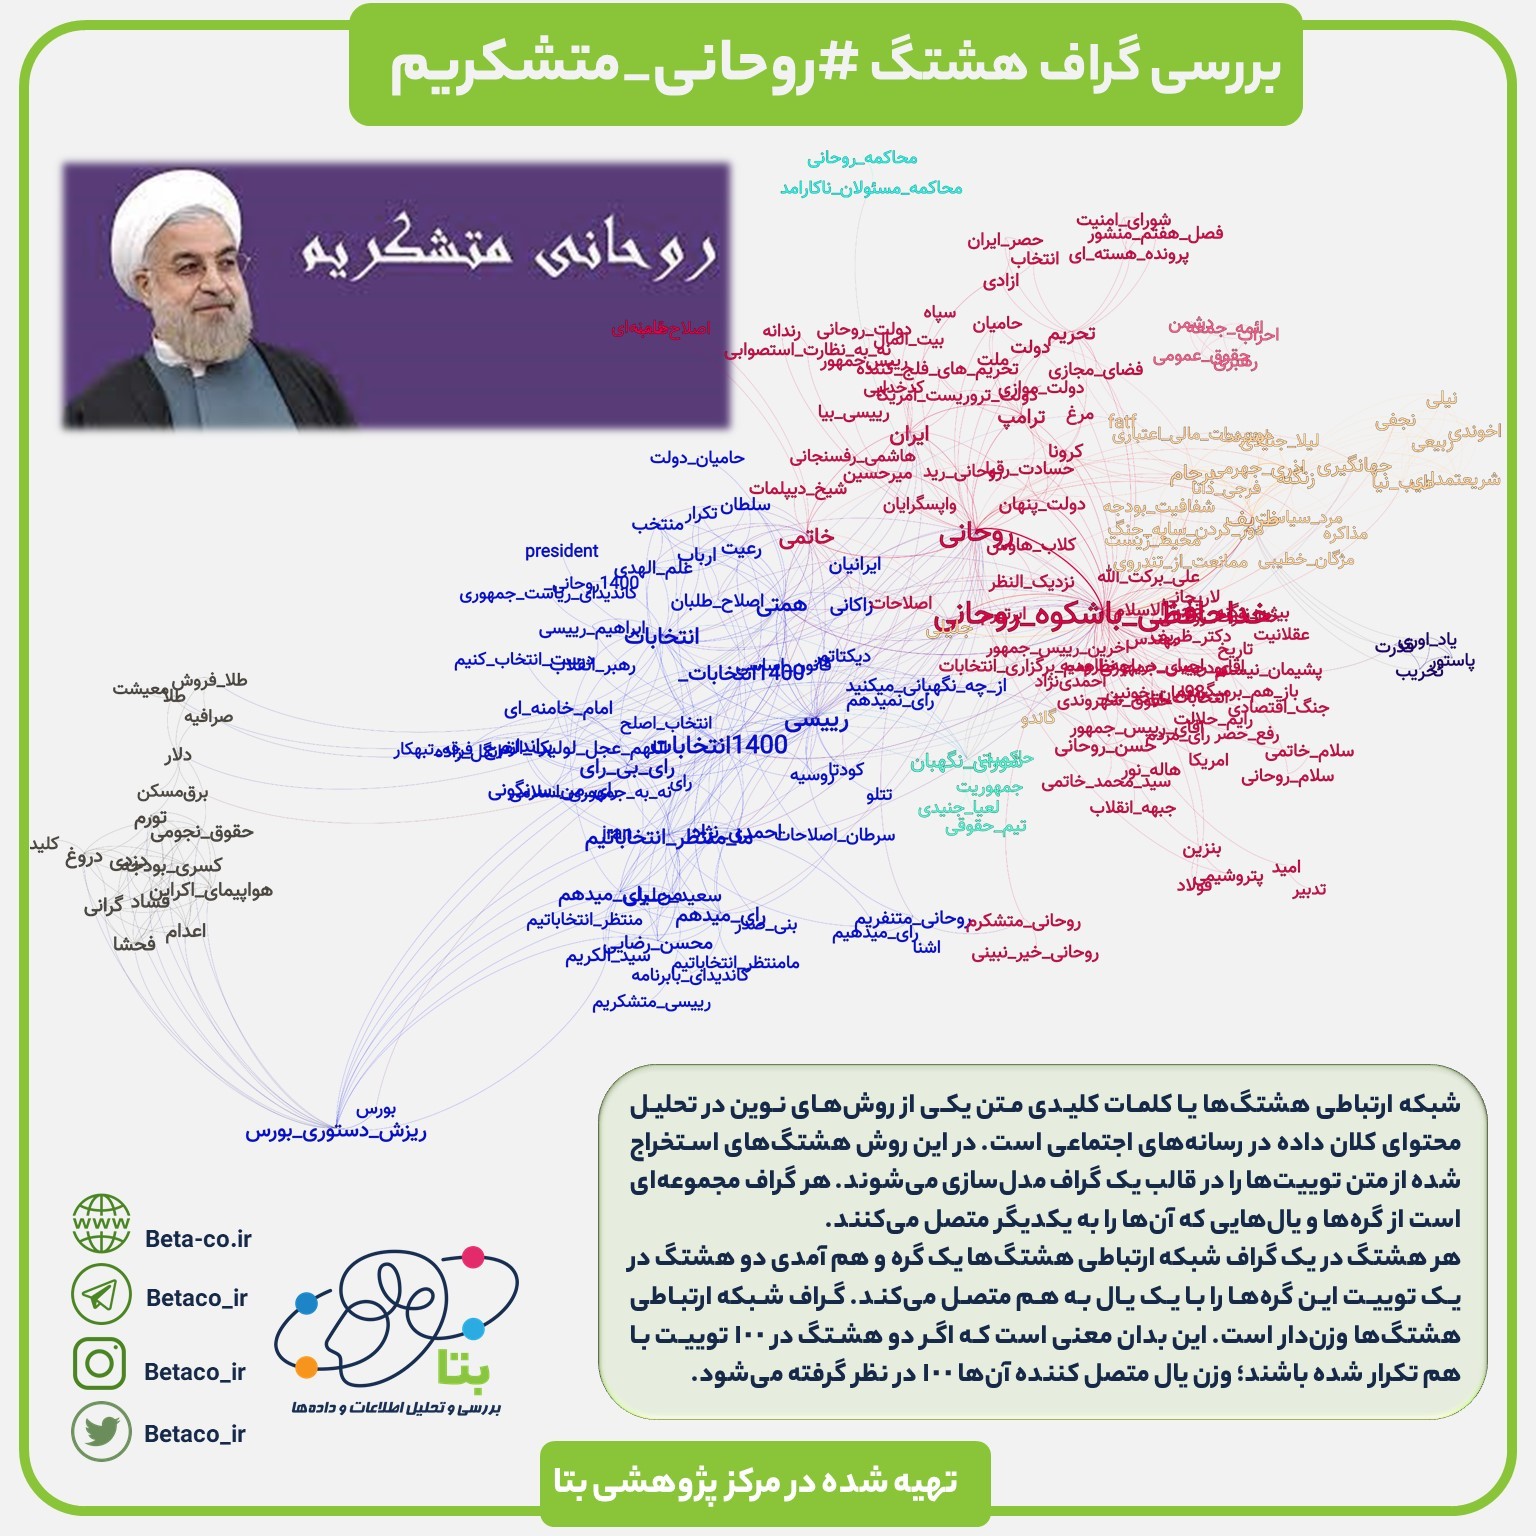 بررسی گراف هشتگ #روحانی_متشکریم